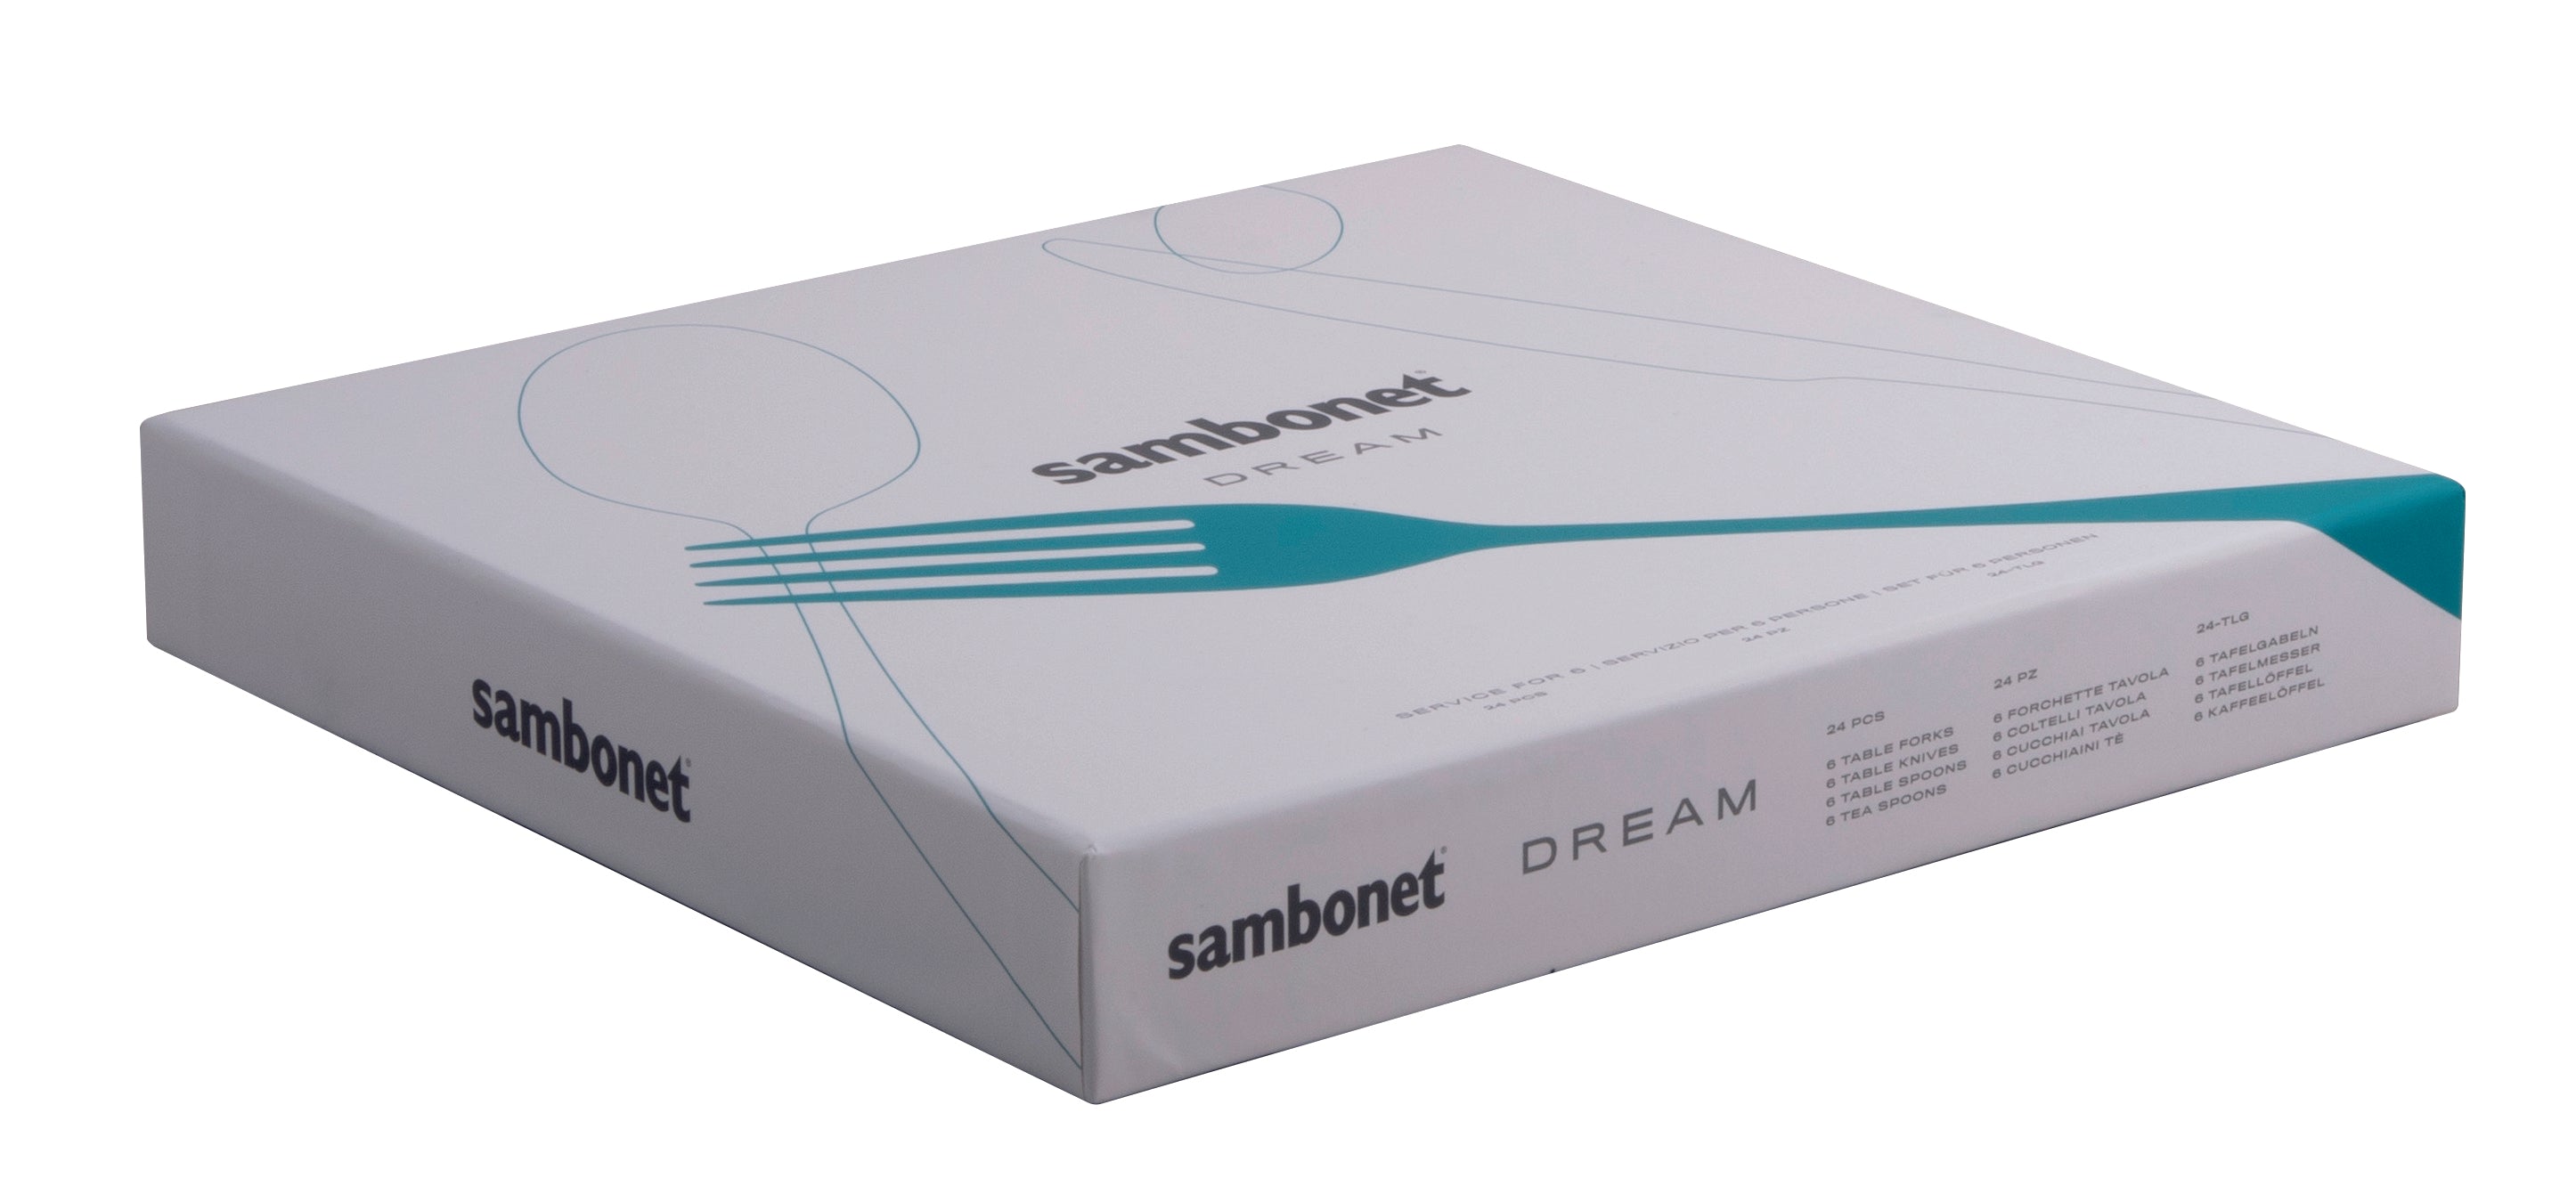 Sambonet Dream Service 24 pieces